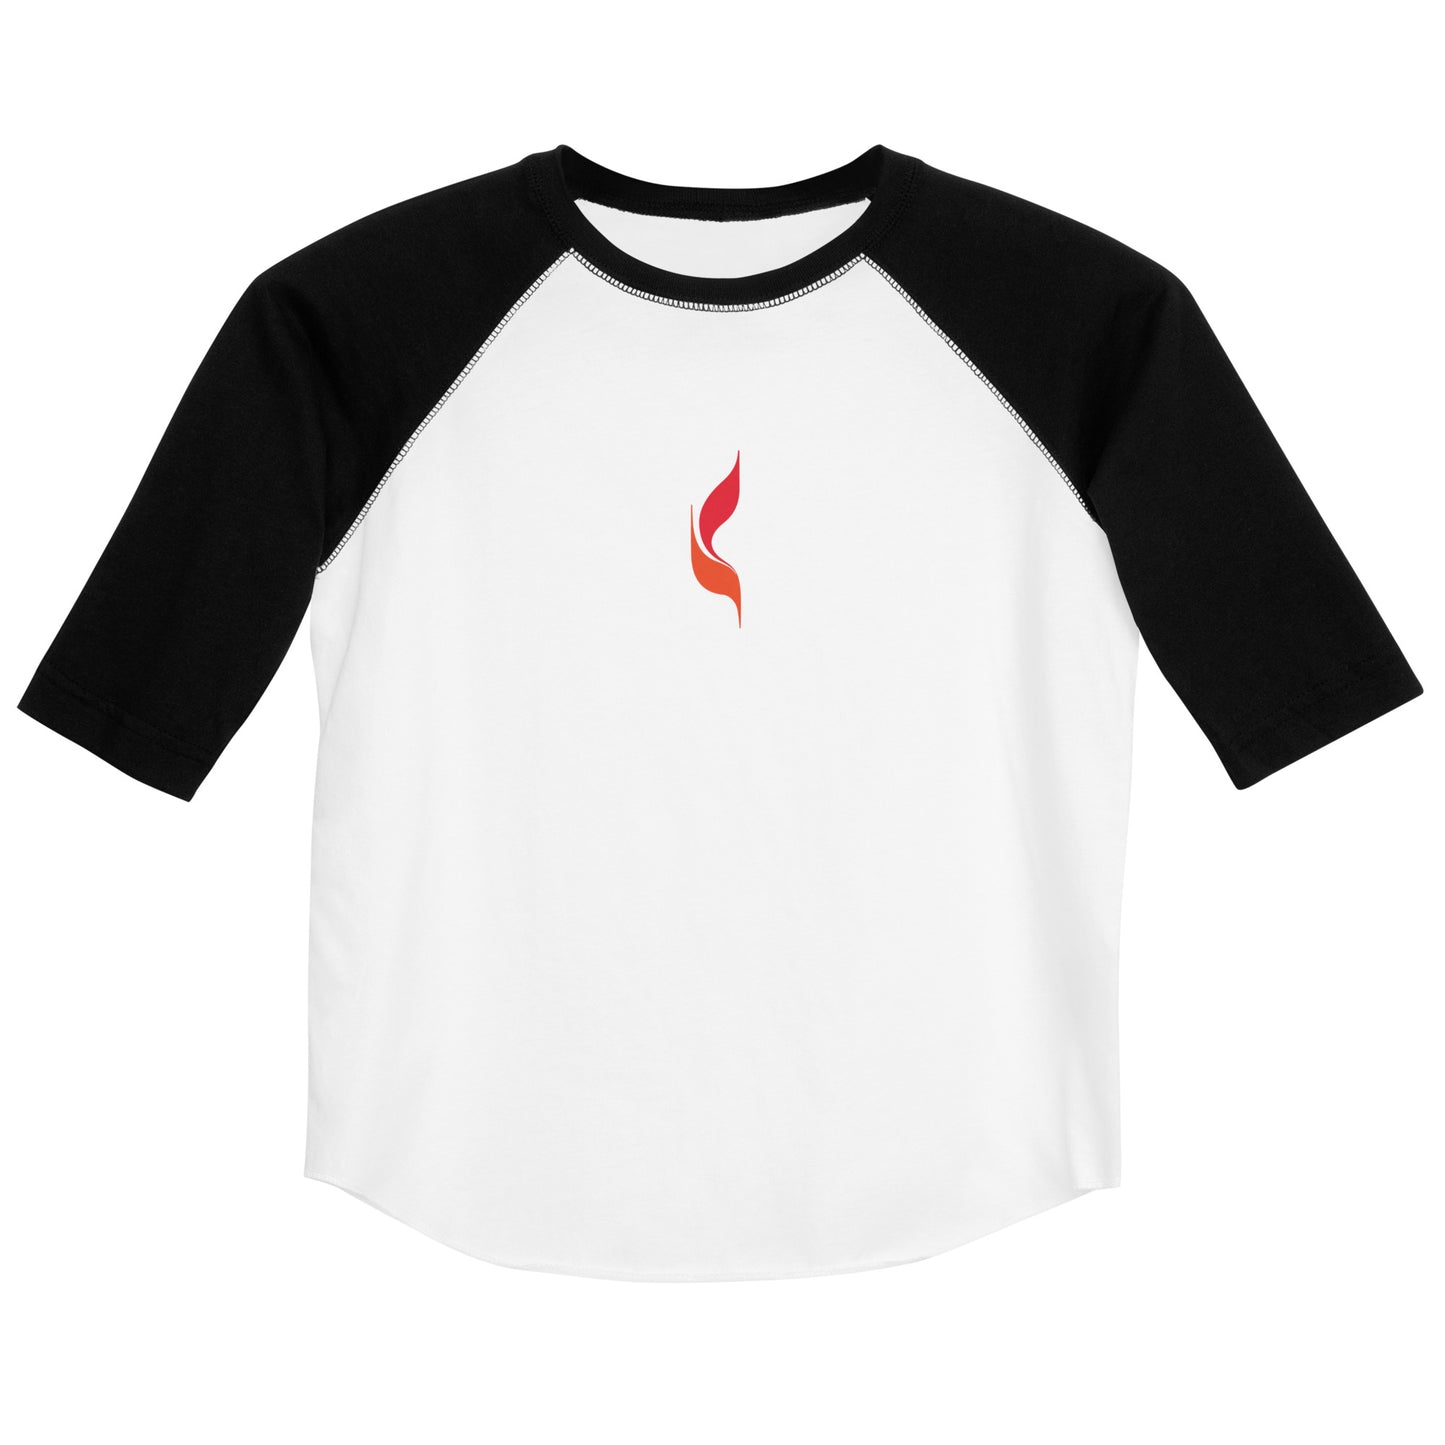 Desert Flame Youth baseball shirt